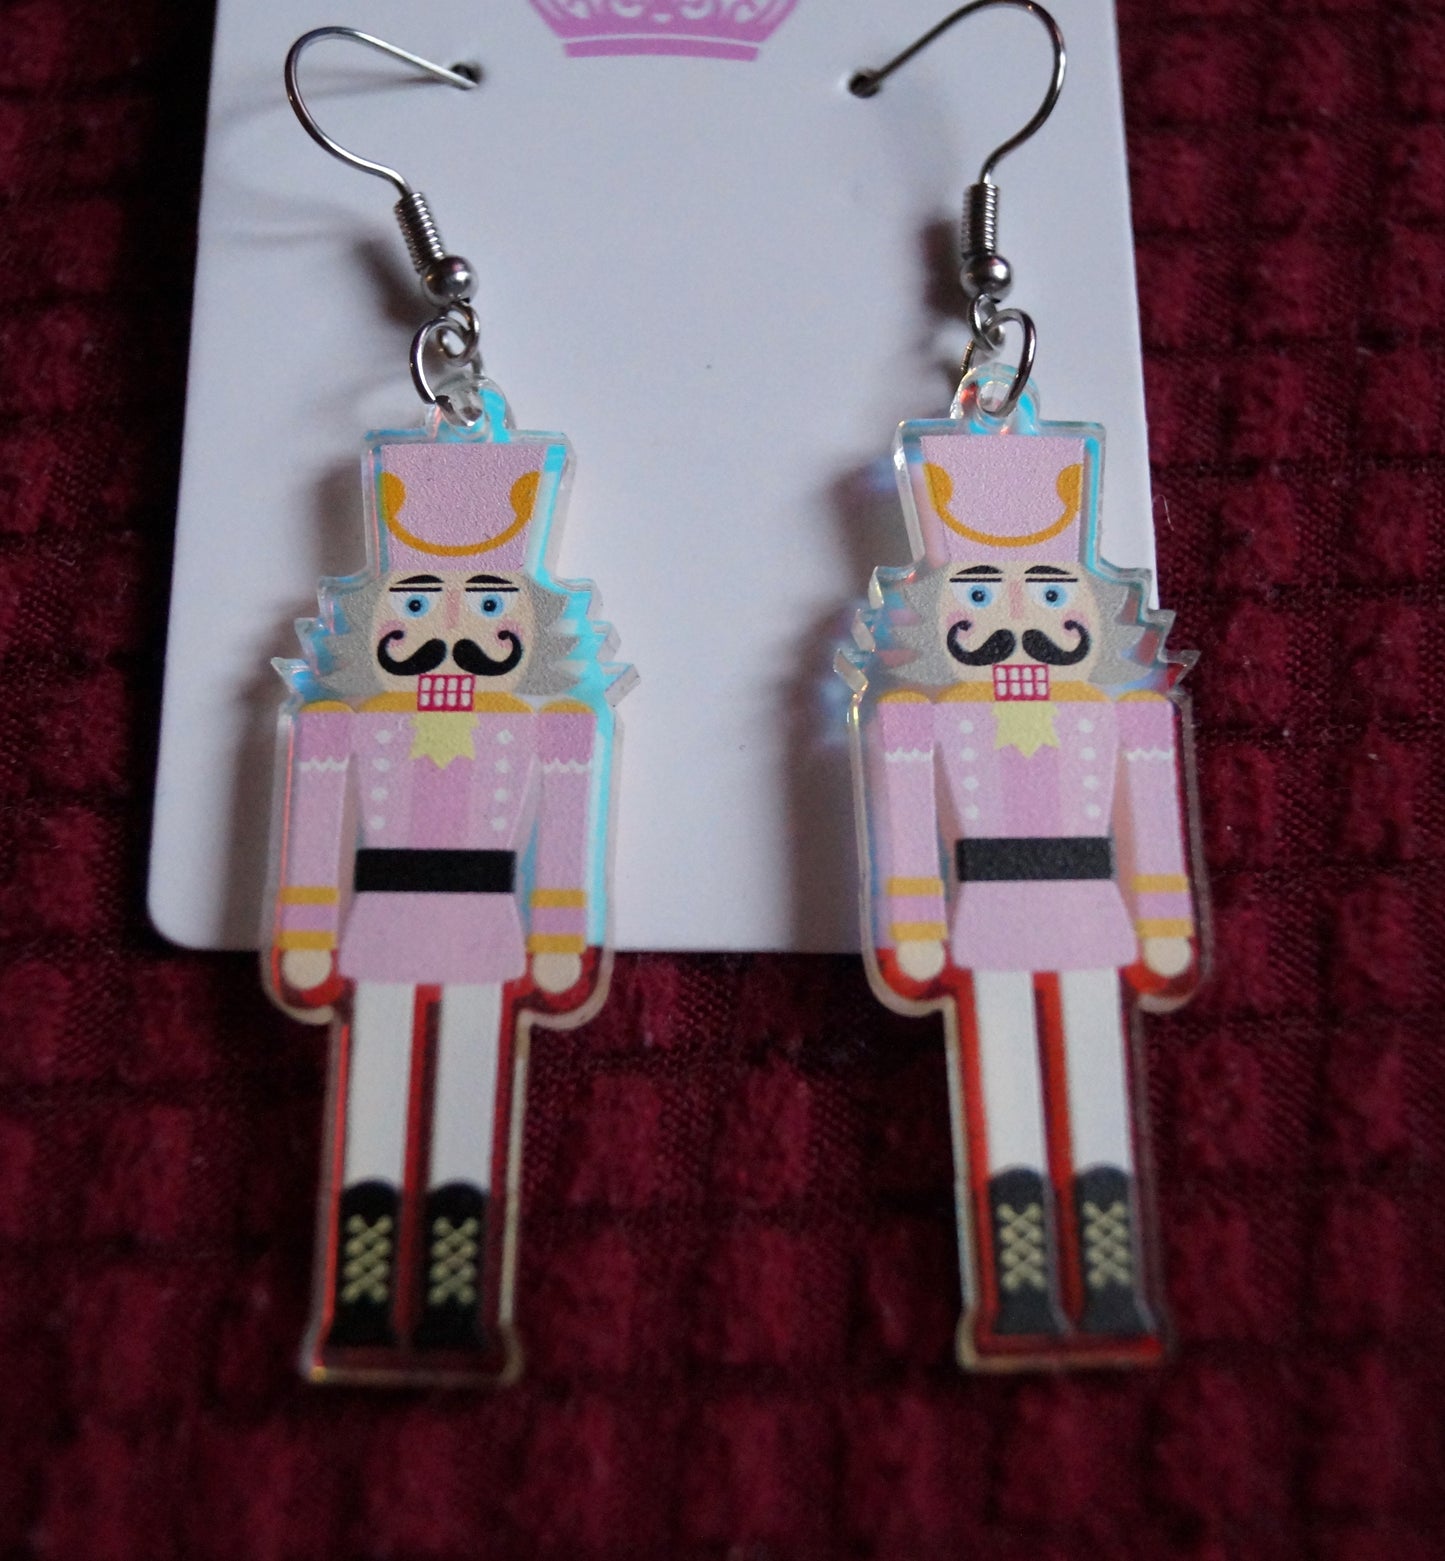 Pair of pink nutcracker ballet earrings